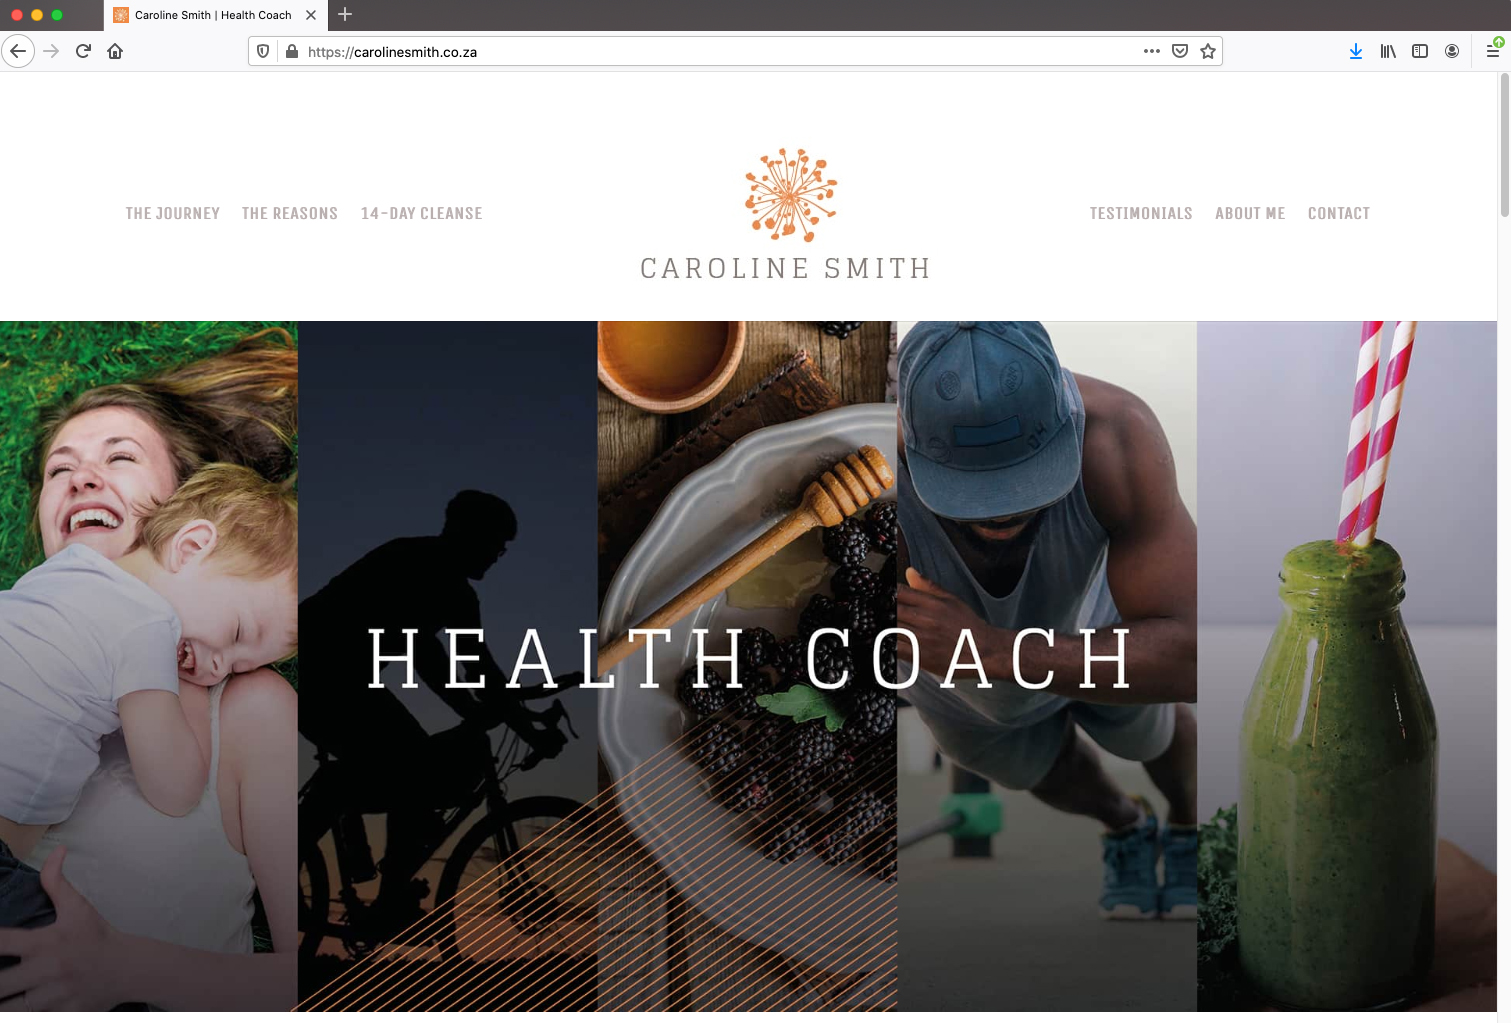 Caroline Smith Health Coach: typical website page